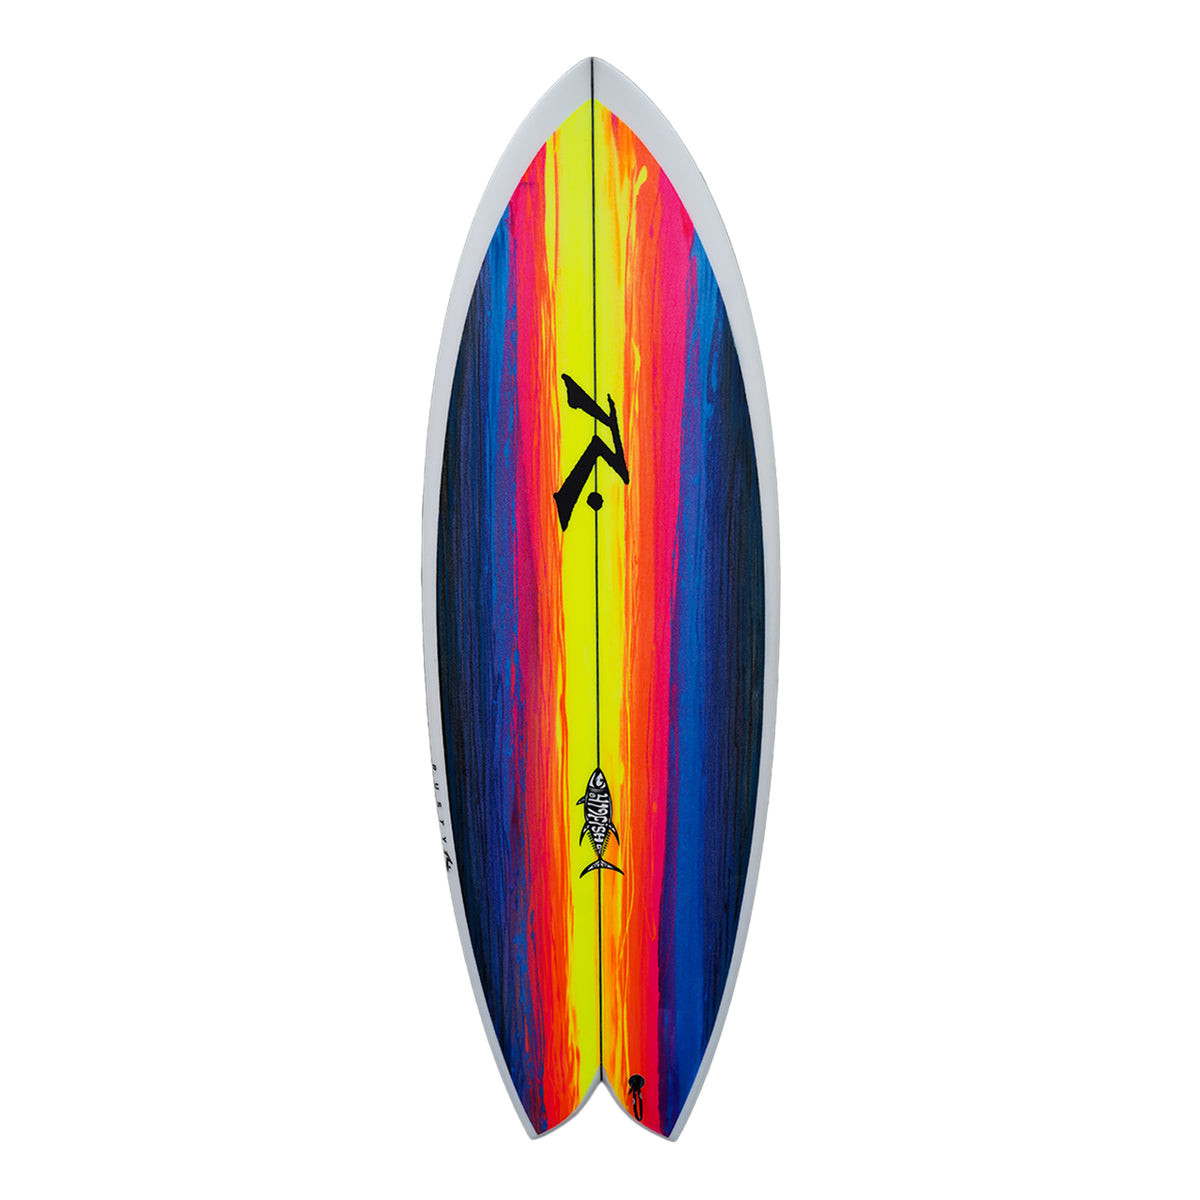 419fish - Alternative - Rusty Surfboards - Top View - Rainbow Gradient